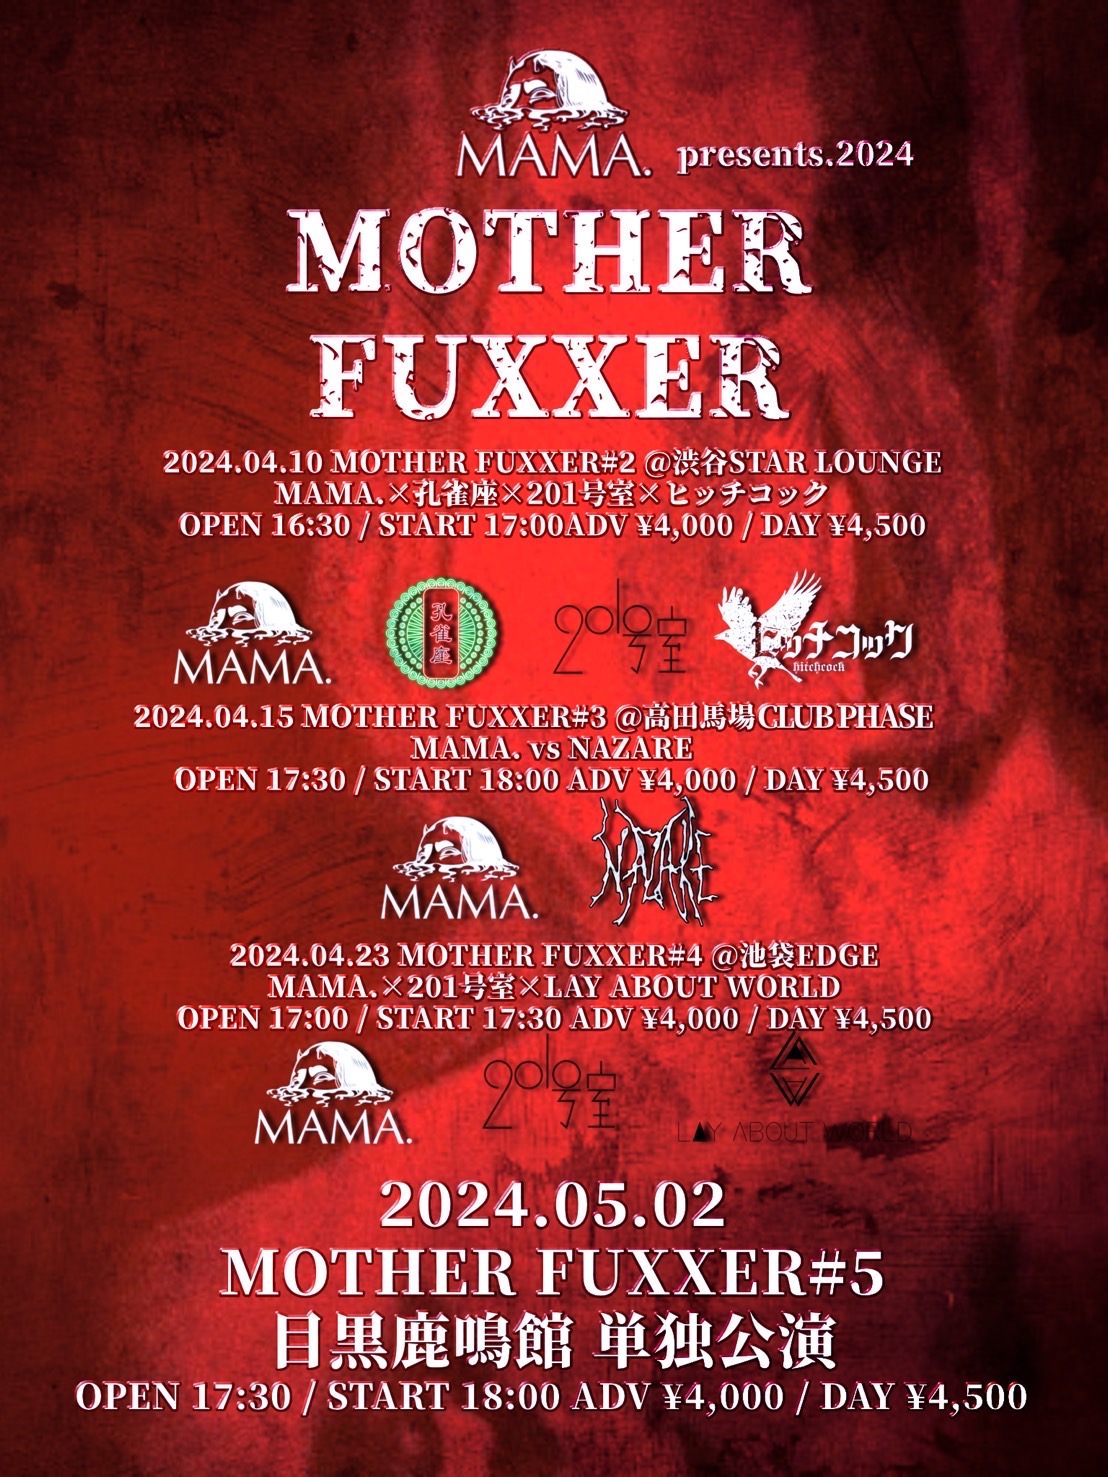 MAMA. presents 2MAN LIVE「MOTHER FUXXER #3」